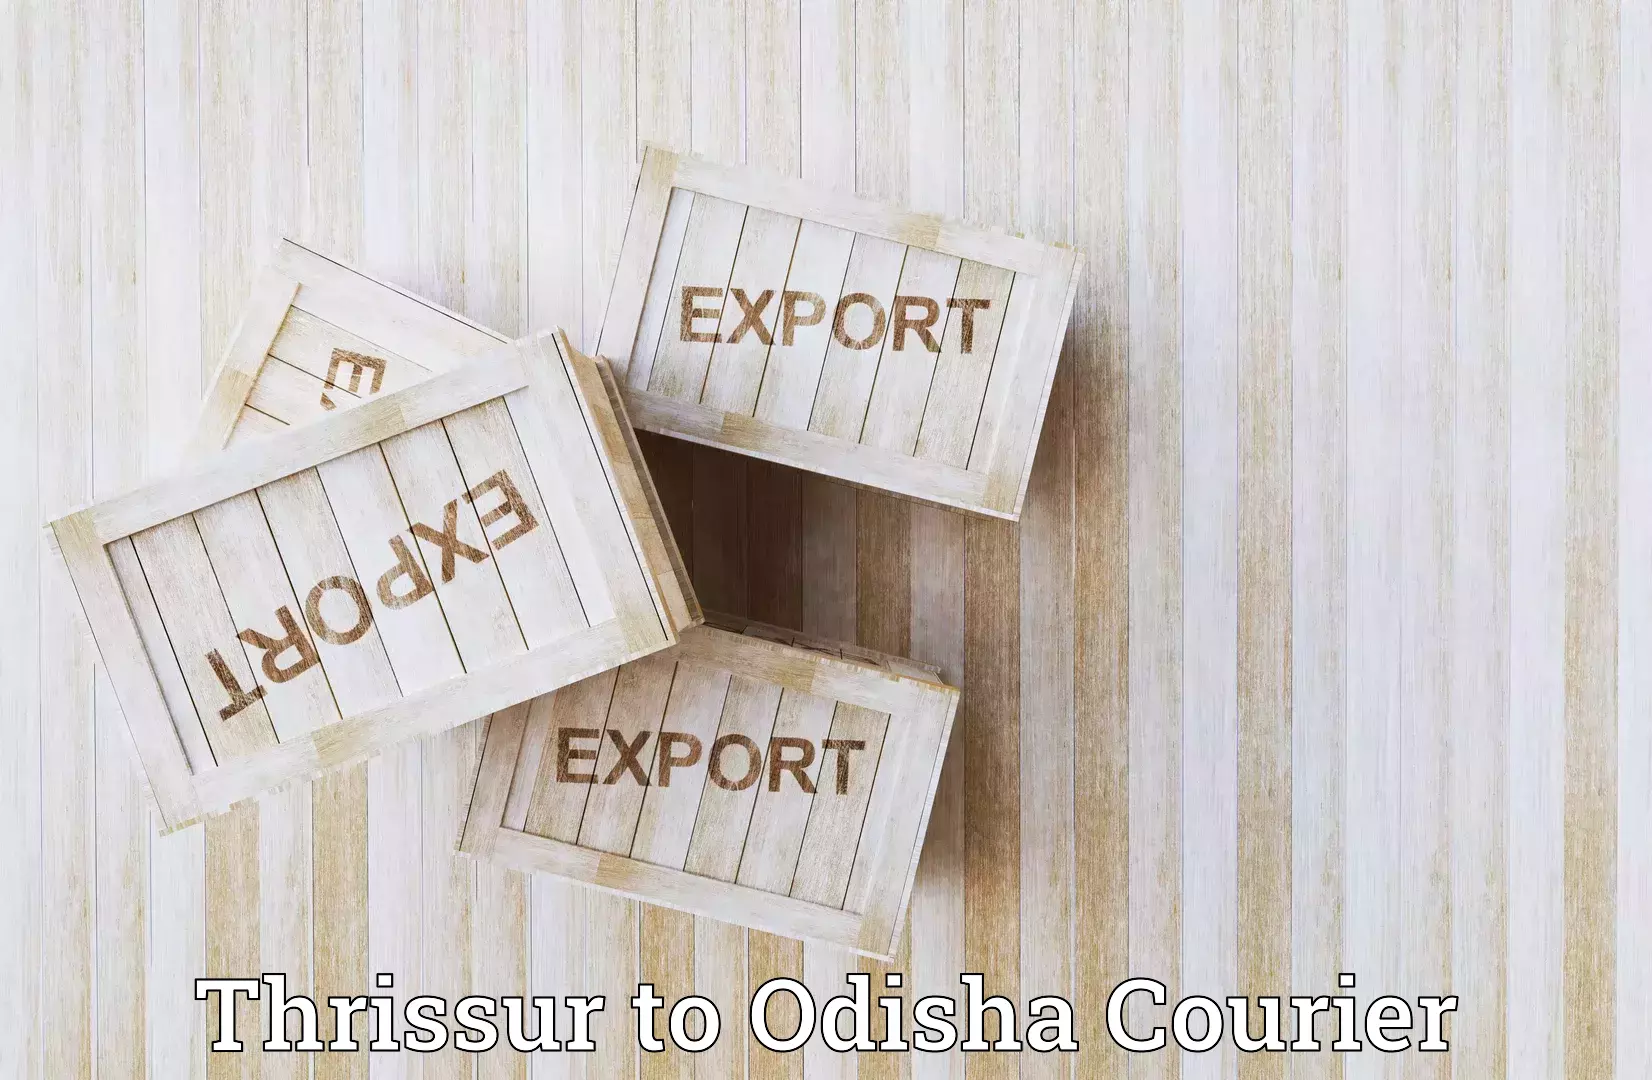 Efficient order fulfillment Thrissur to Odisha